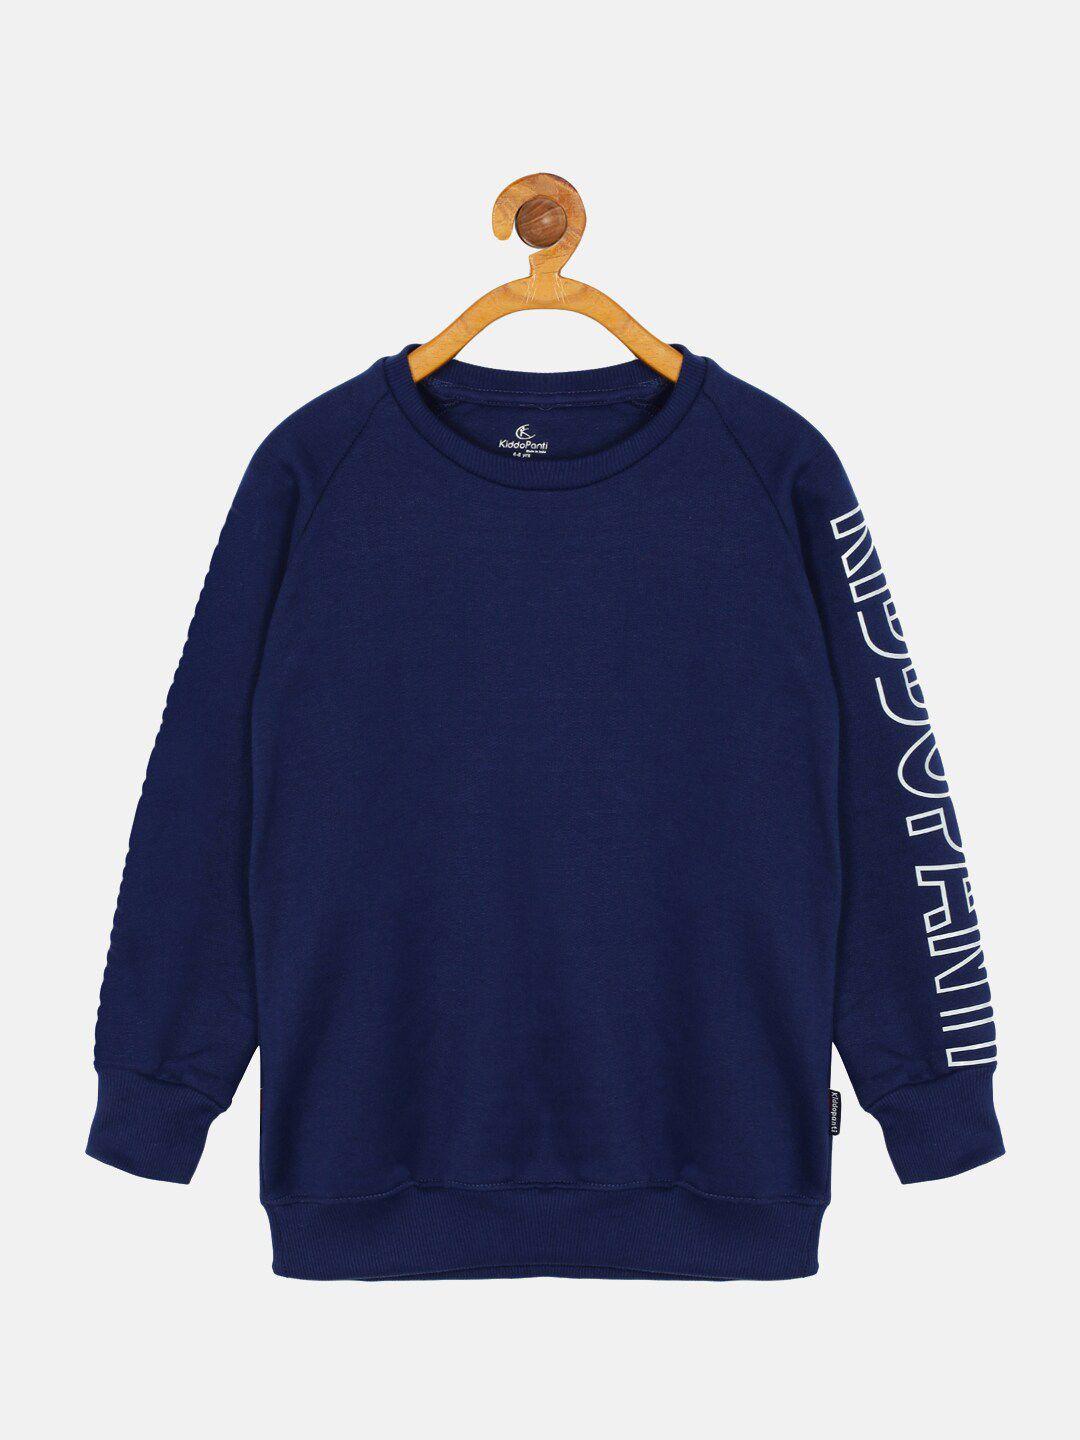 kiddopanti-boys-navy-blue-sweatshirt